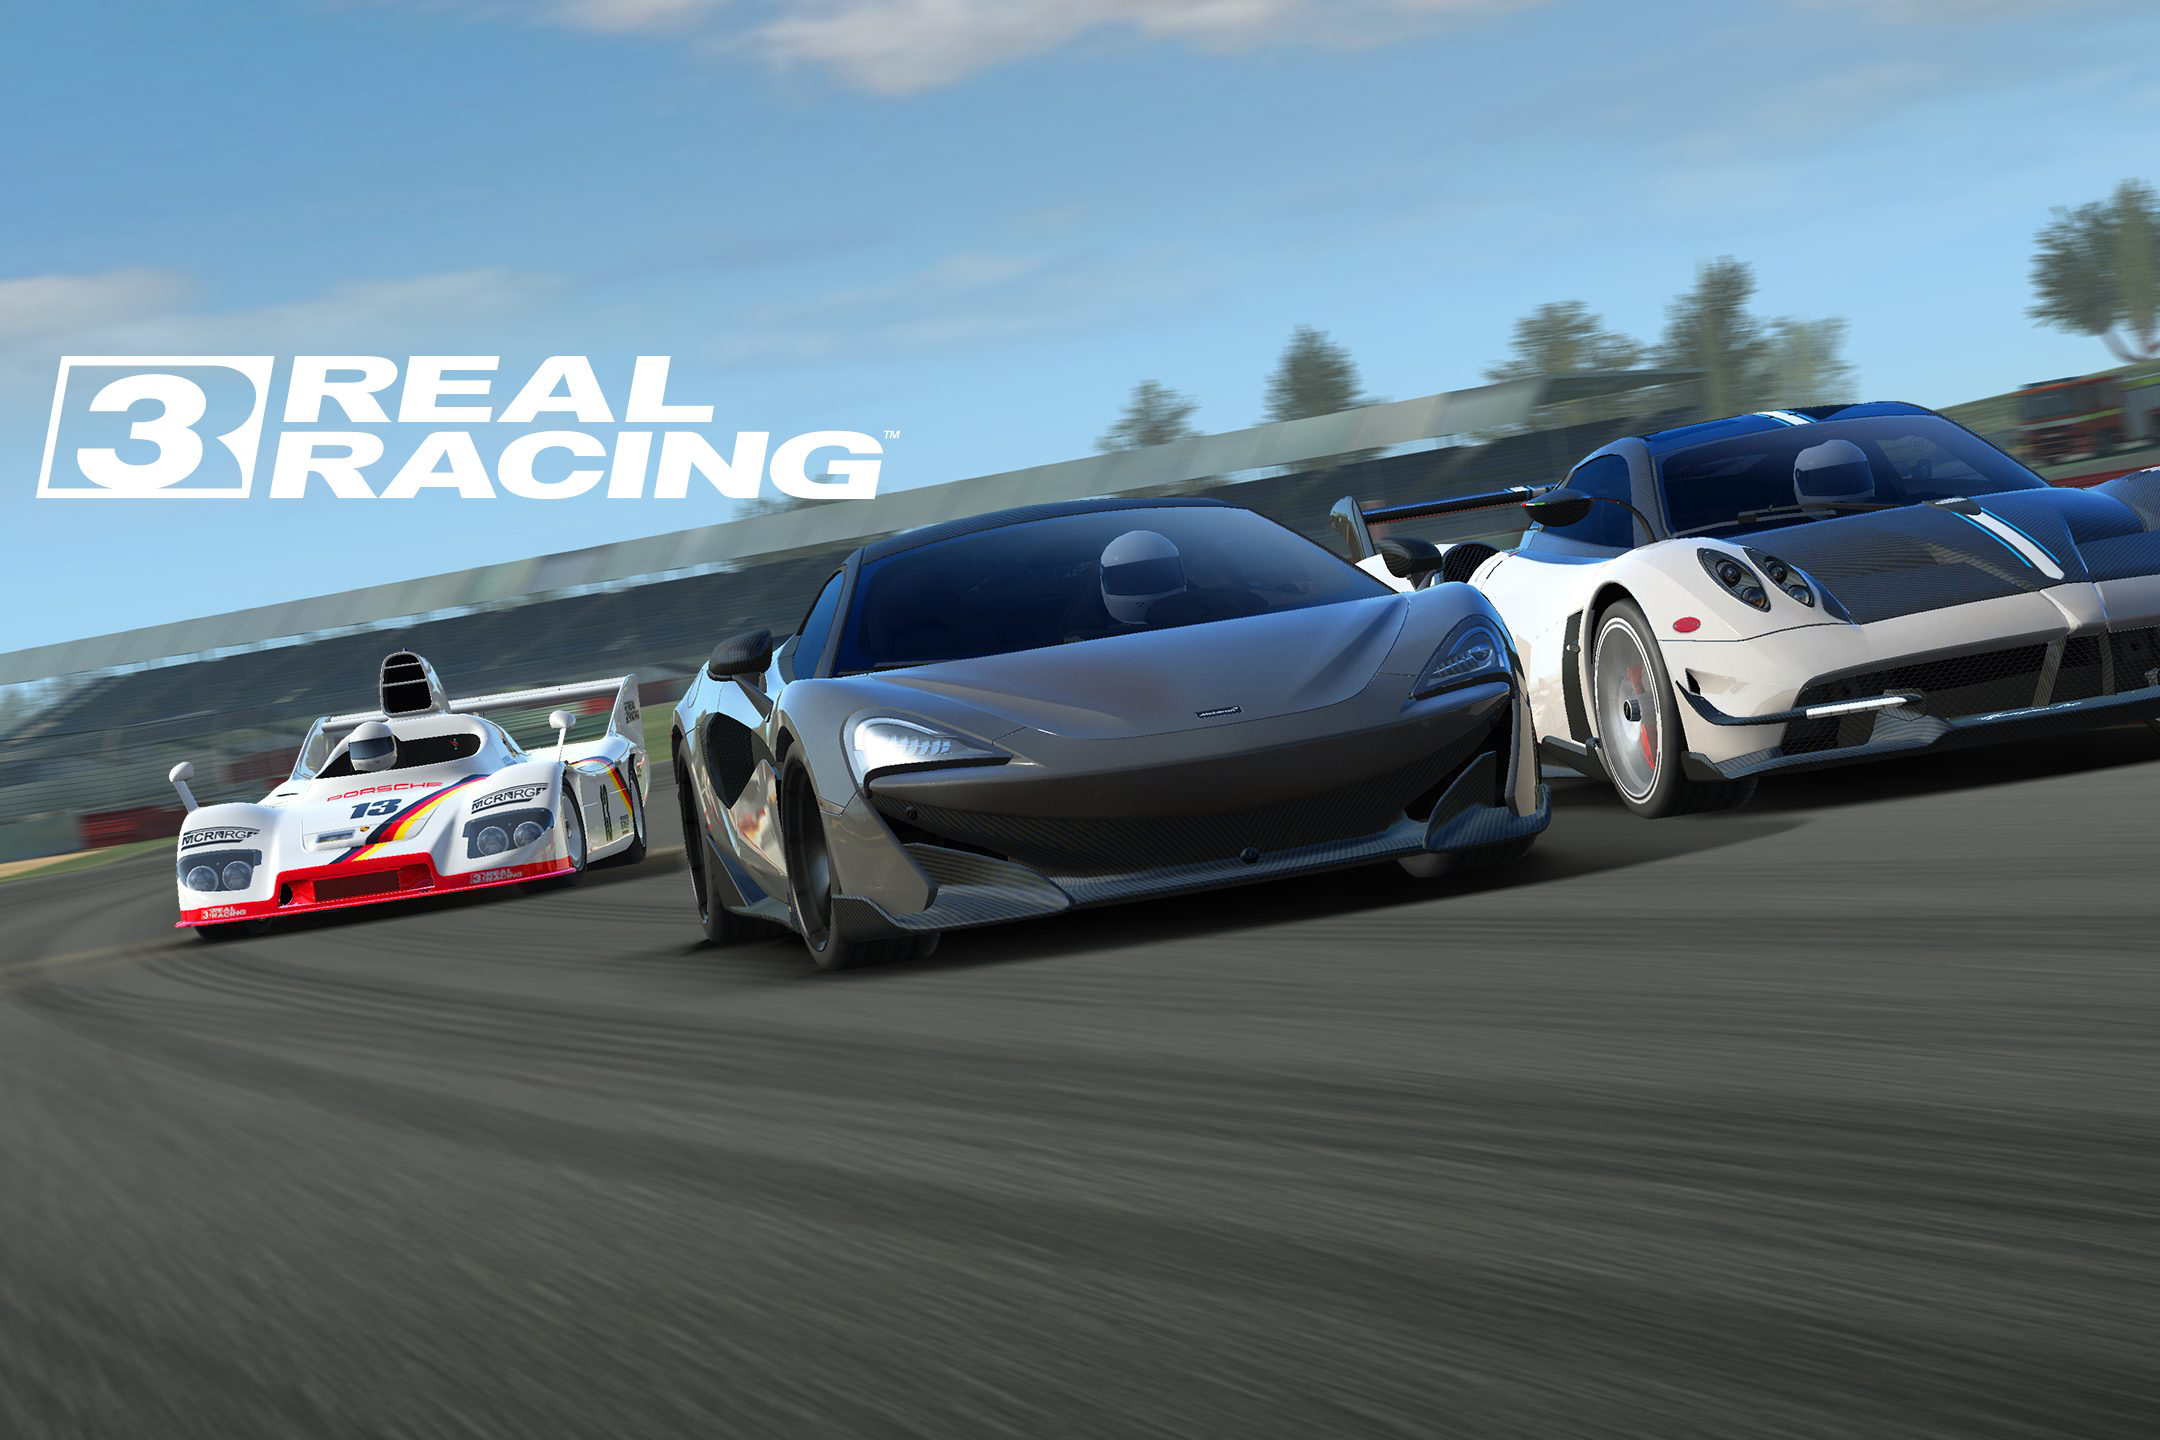 Jogos de Carros - Sports Car Racing - Jogos Android de Carros